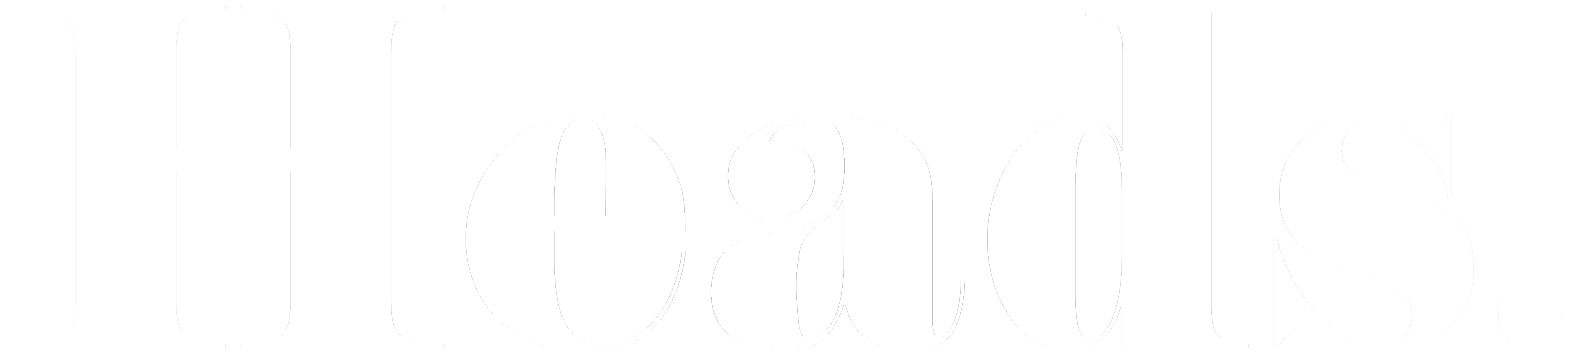 Heads_logo